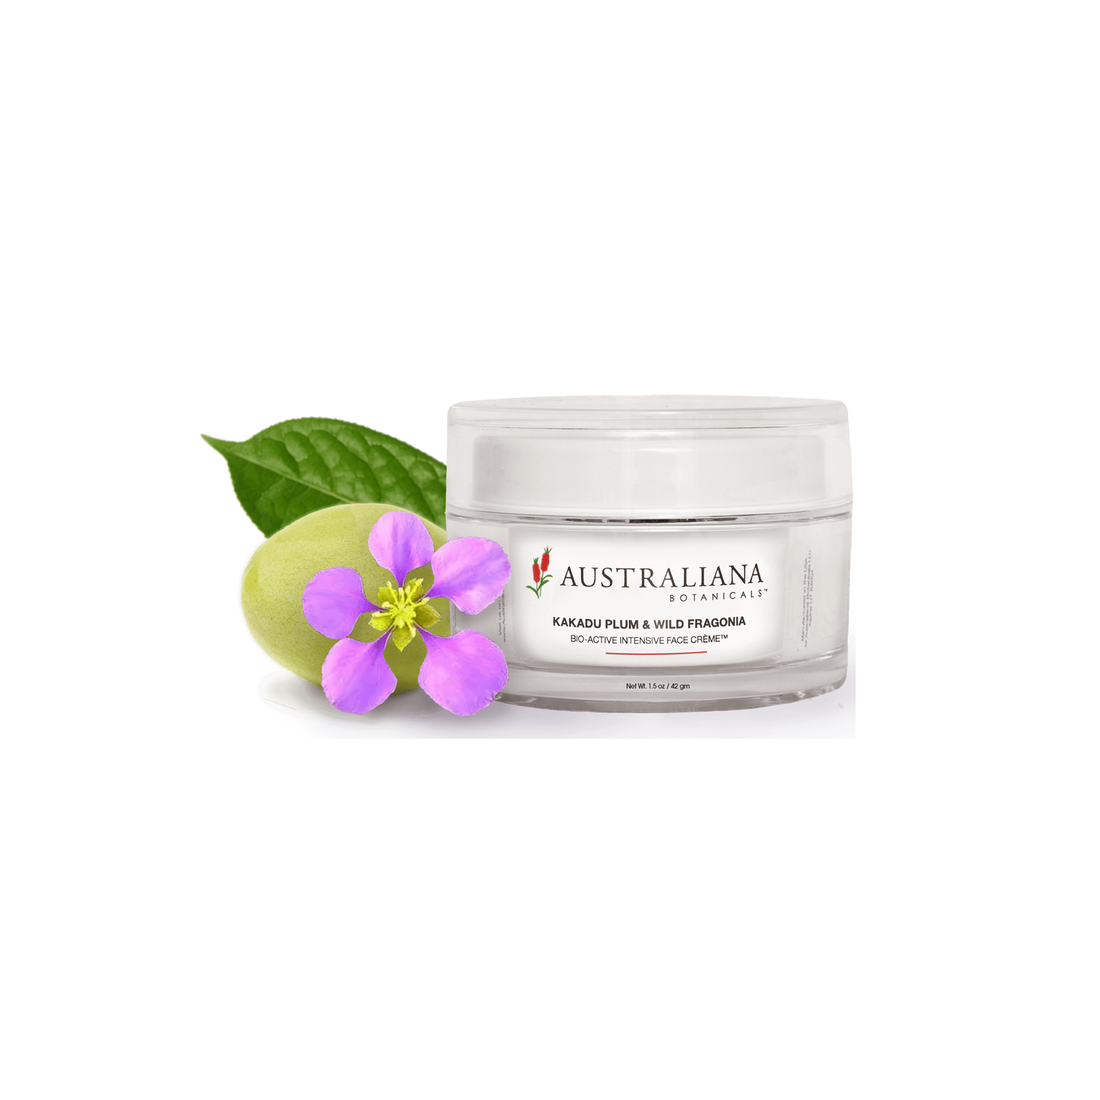 Kakadu Plum &amp; Wild Fragonia™ Bio-active Intensive Face Cream